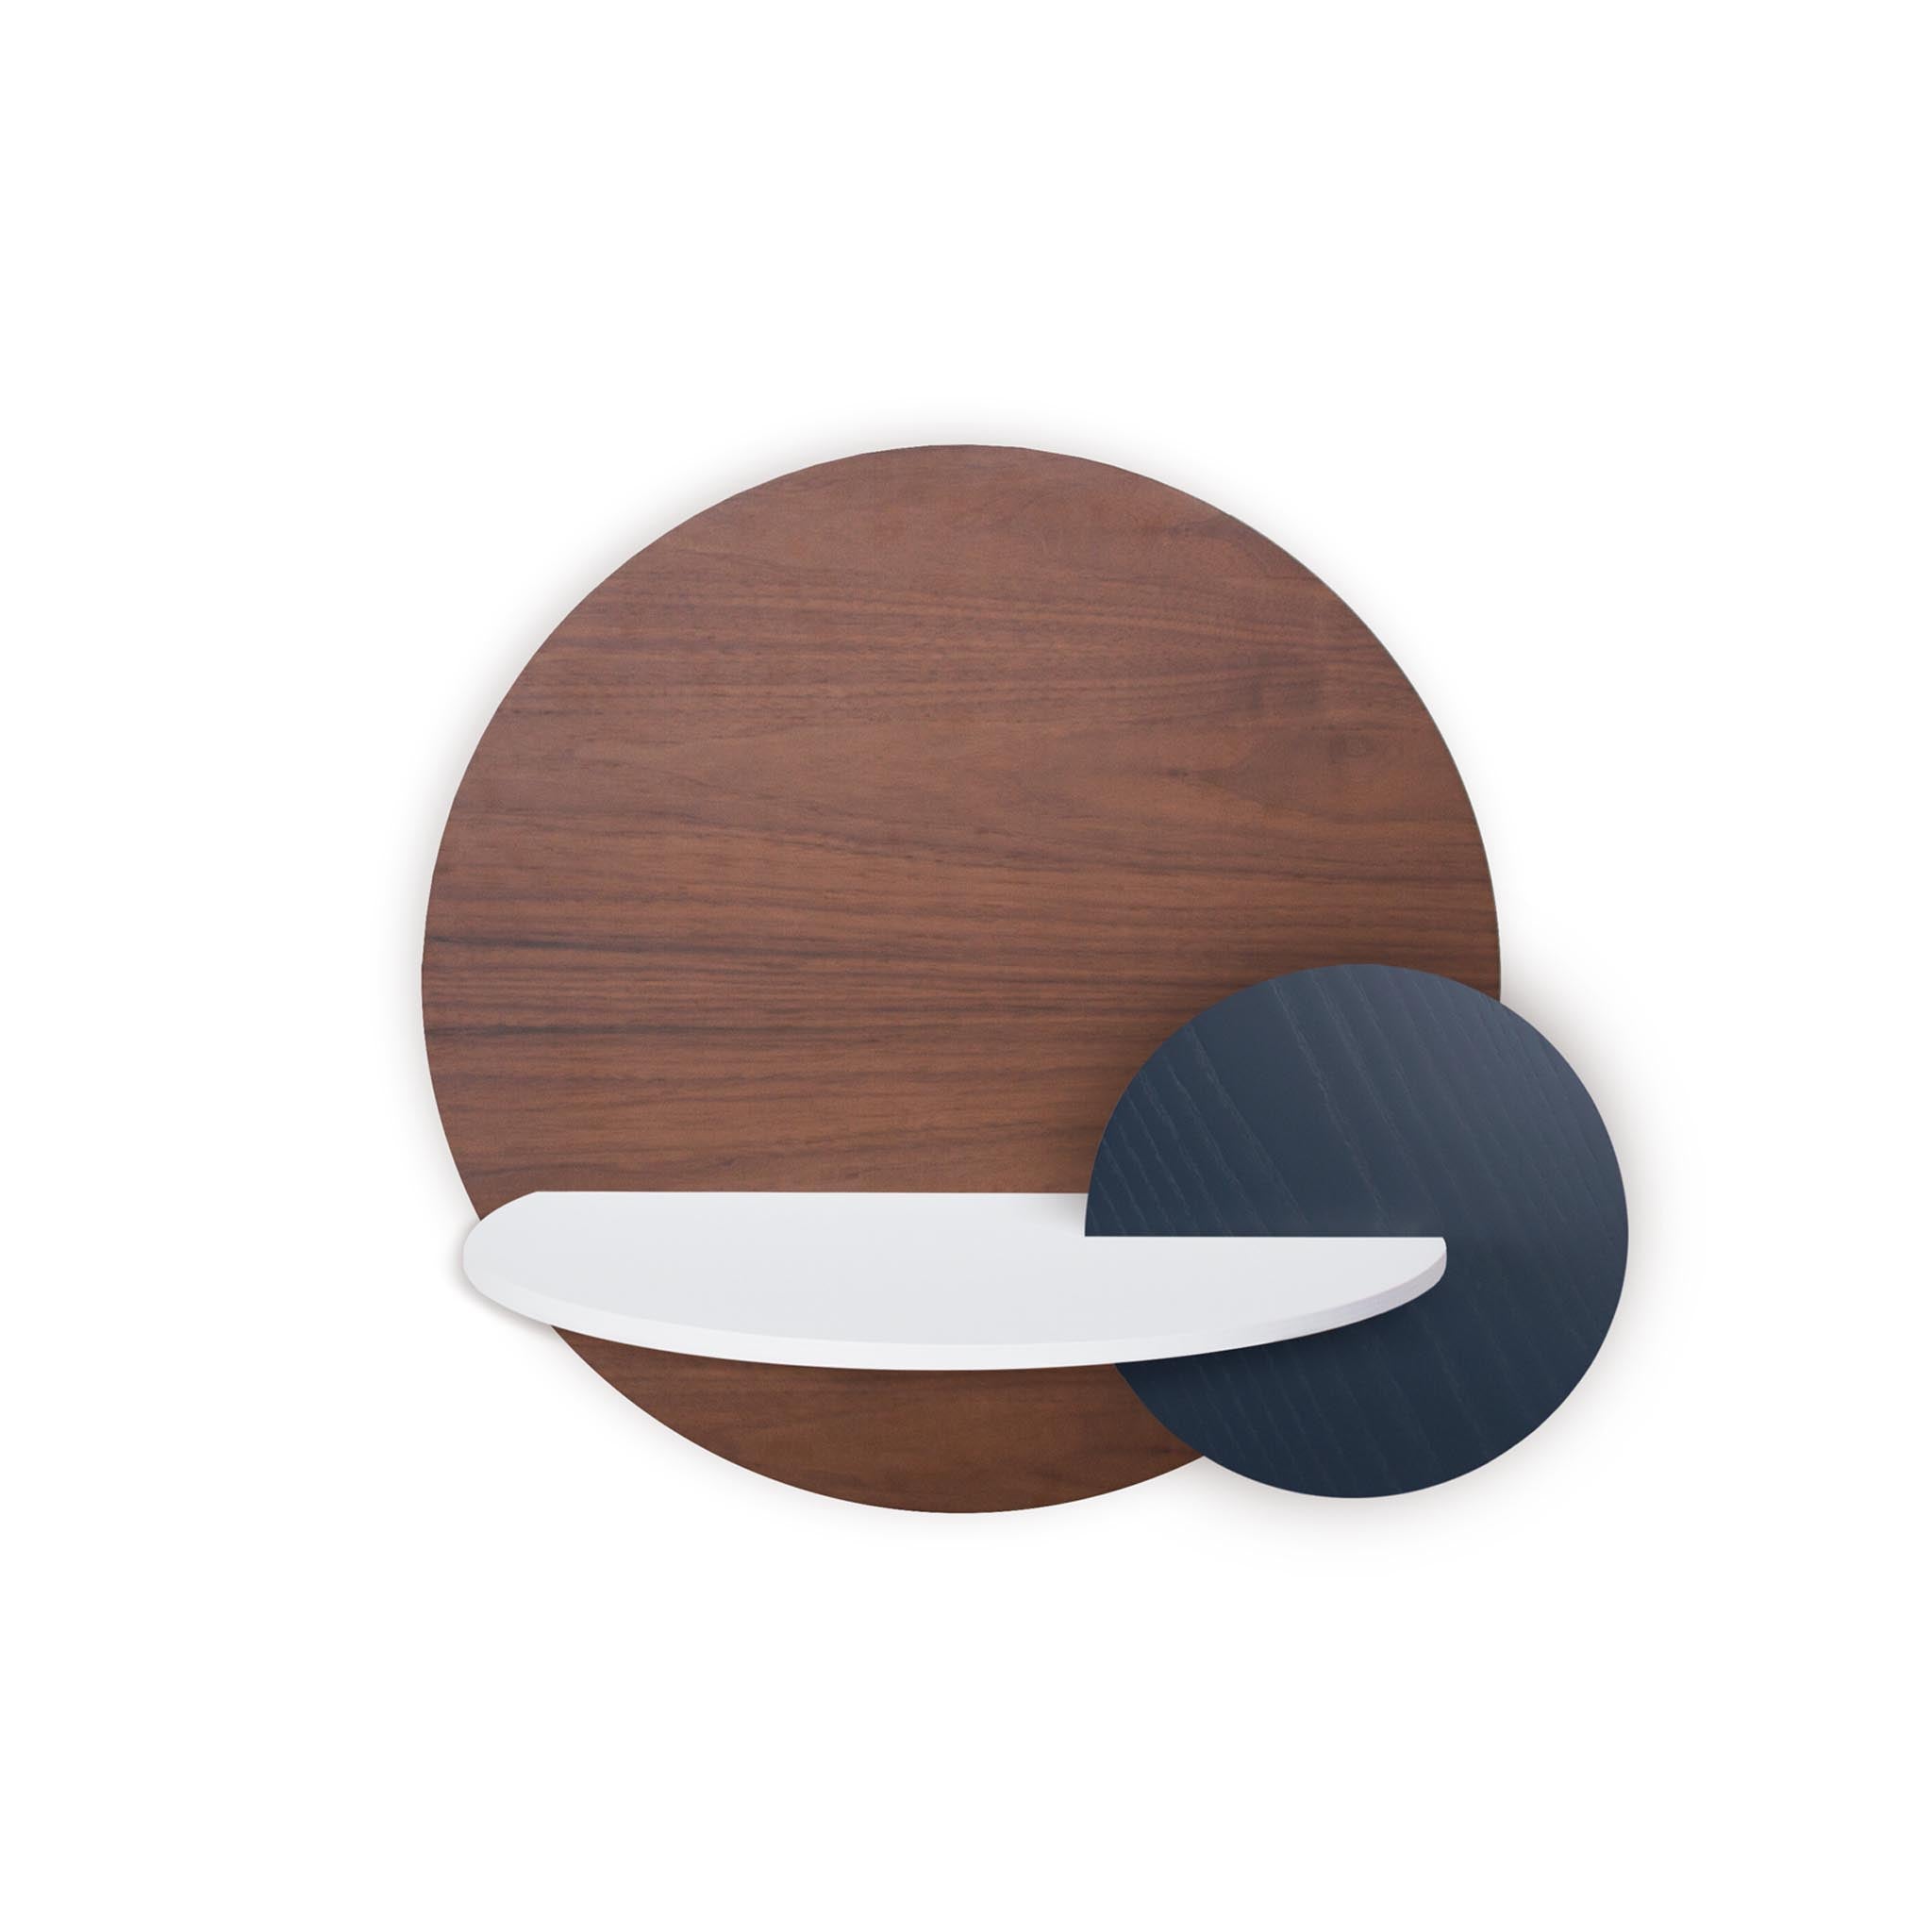 Alba floating nightstand · Walnut circle